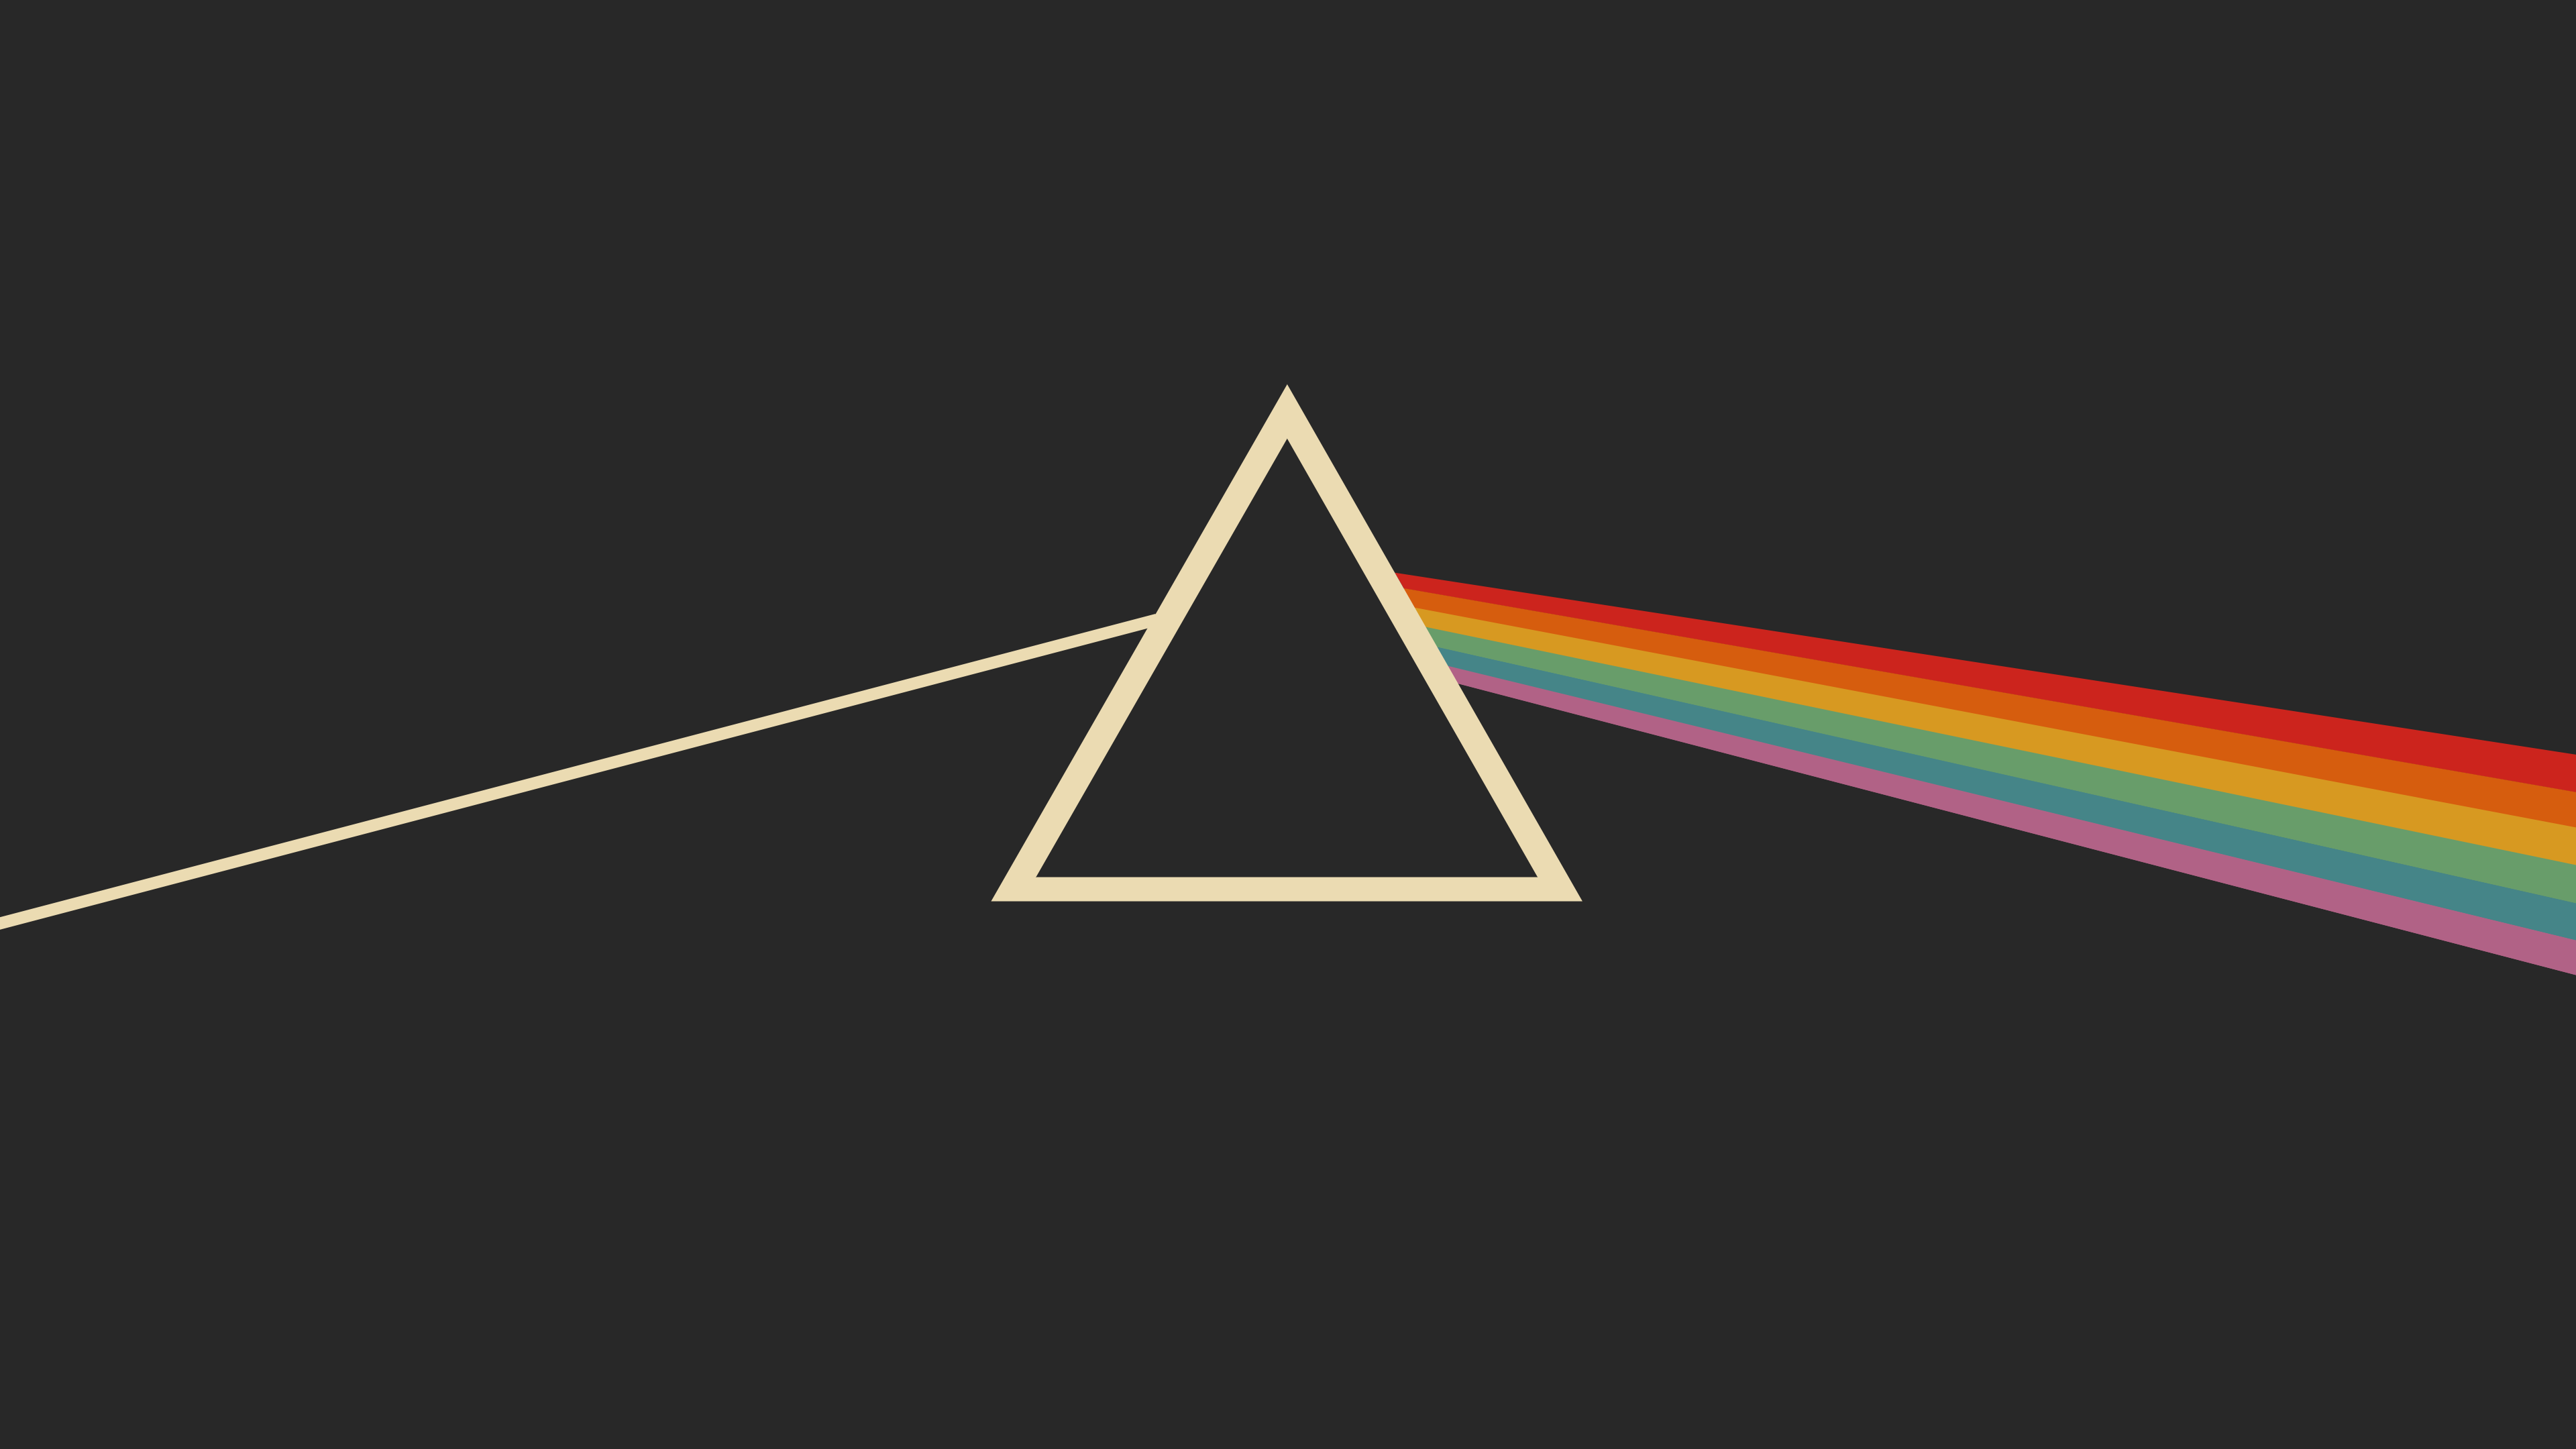 Pink Floyd Gruvbox Refraction Minimalism Simple Background Rainbows Pyramid 3840x2160